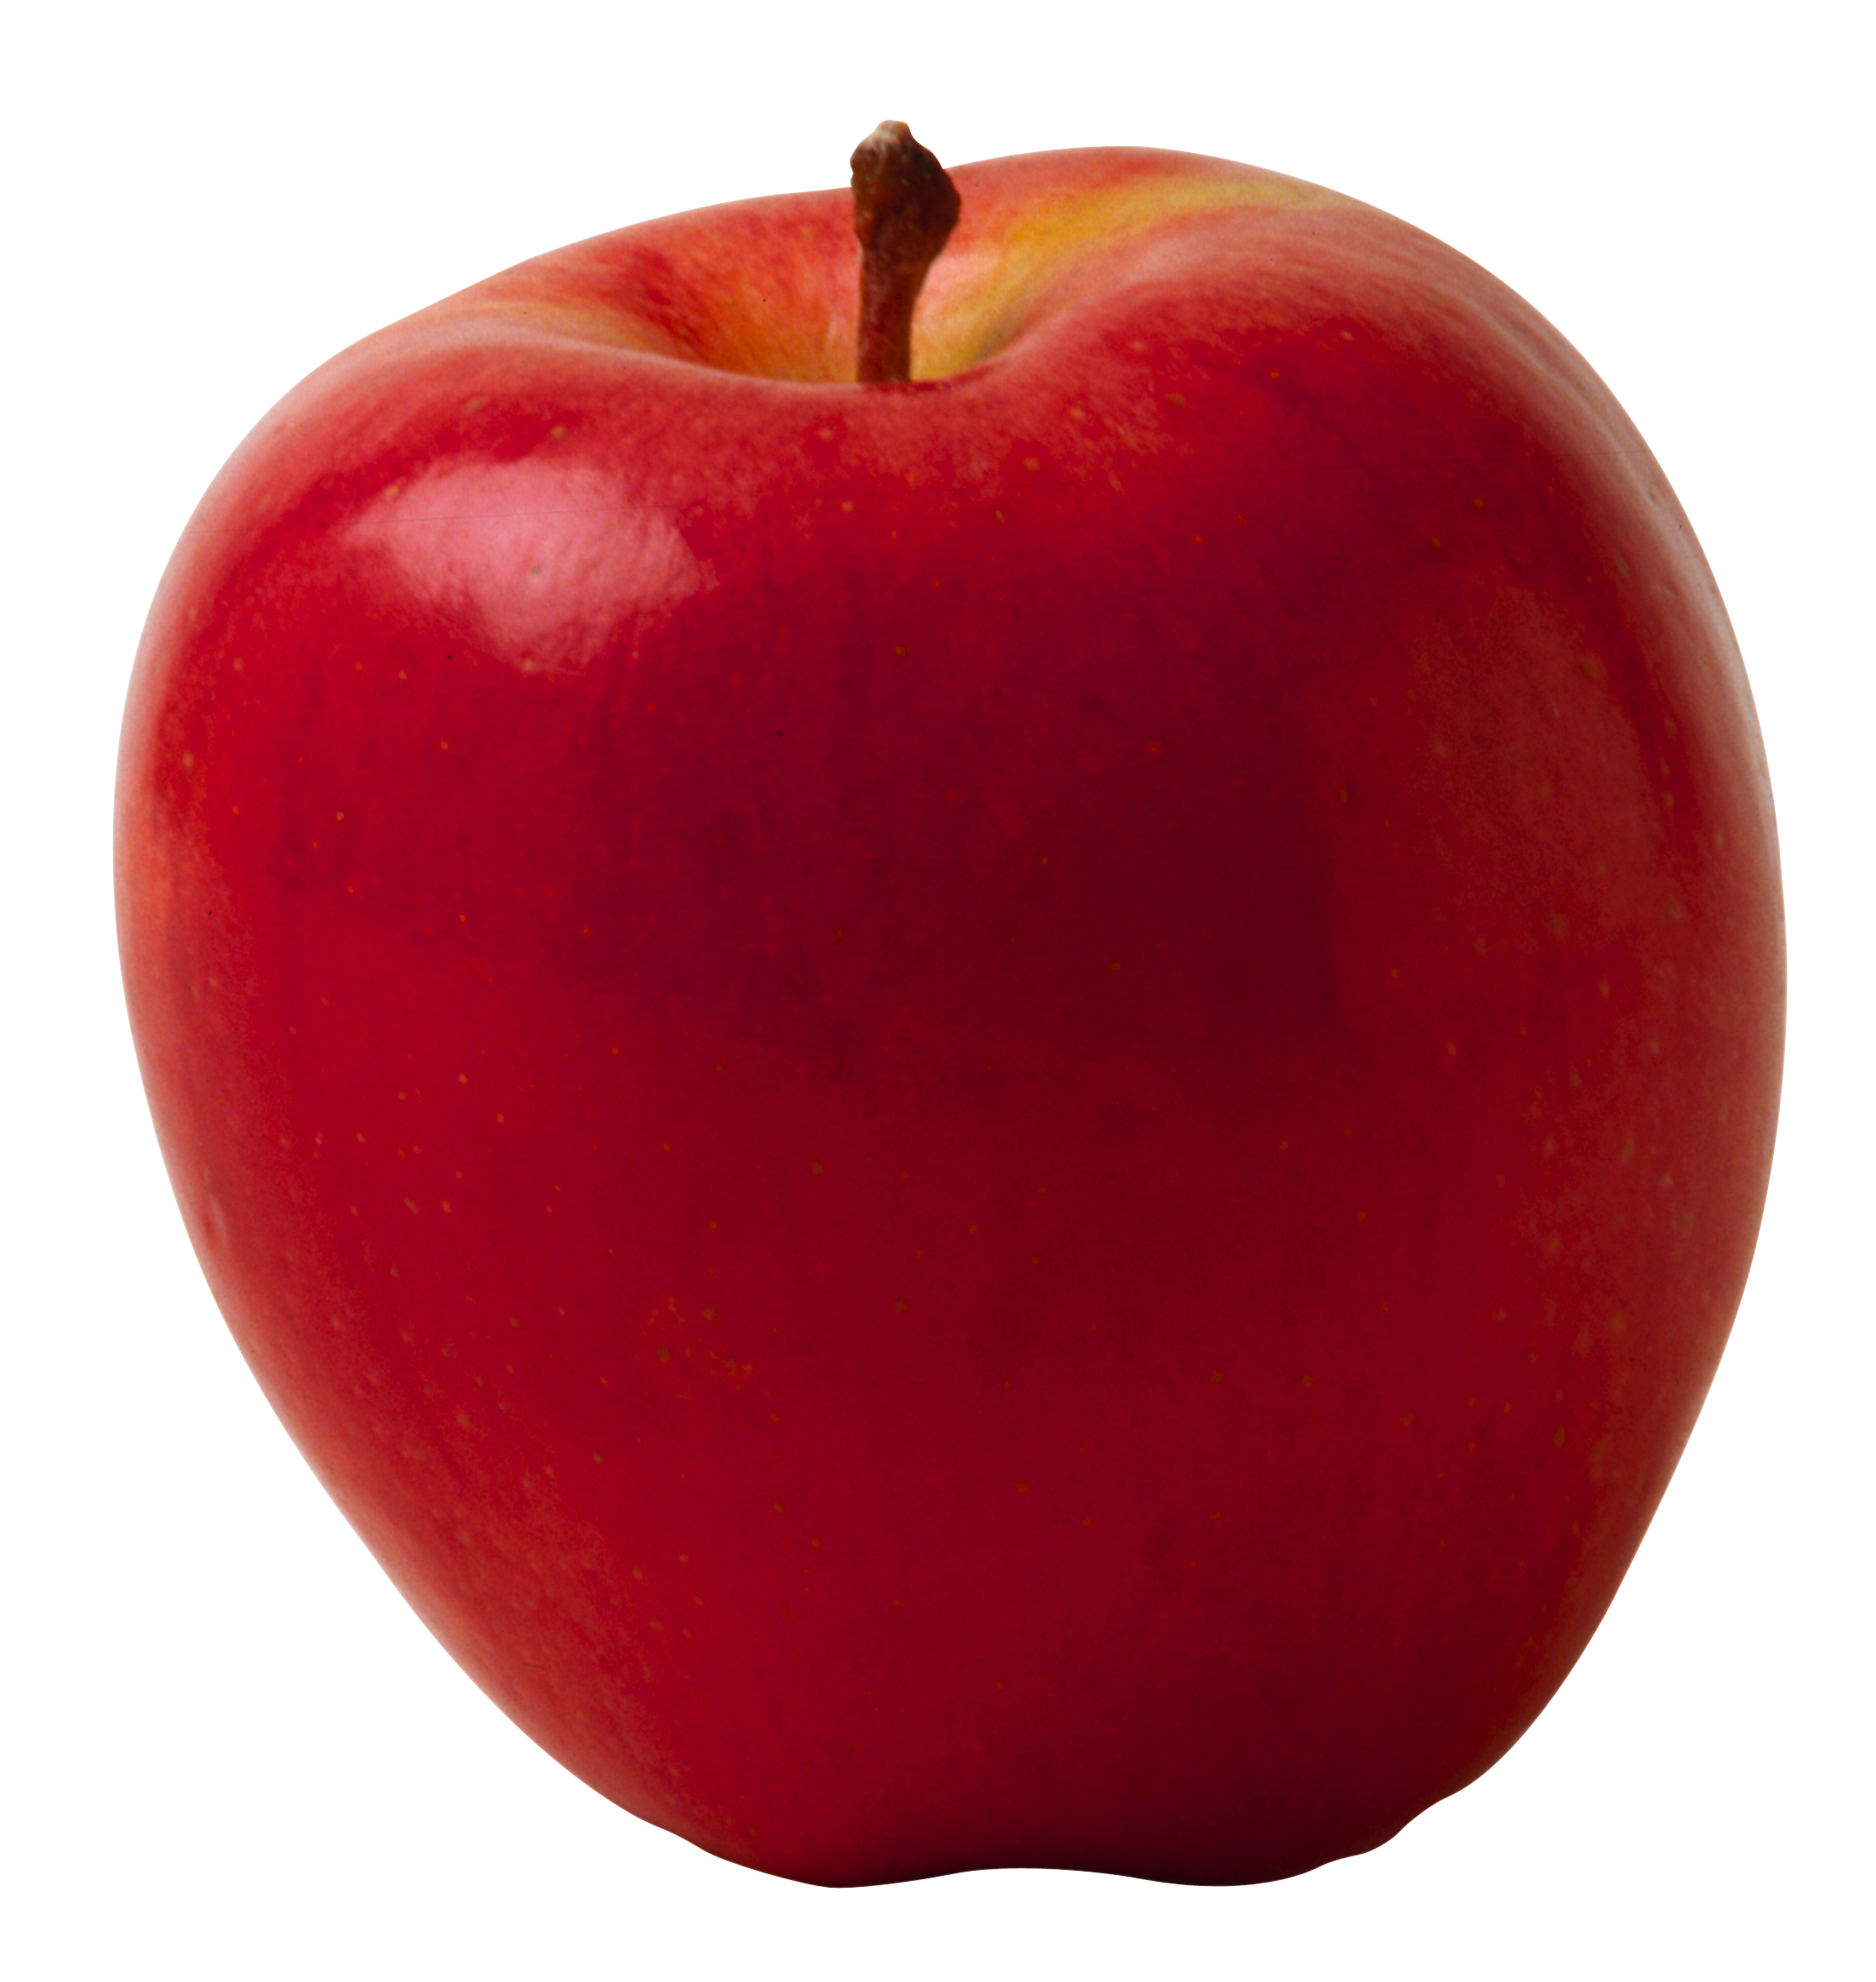 Apple Fruit PNG Image in High Definition pngteam.com